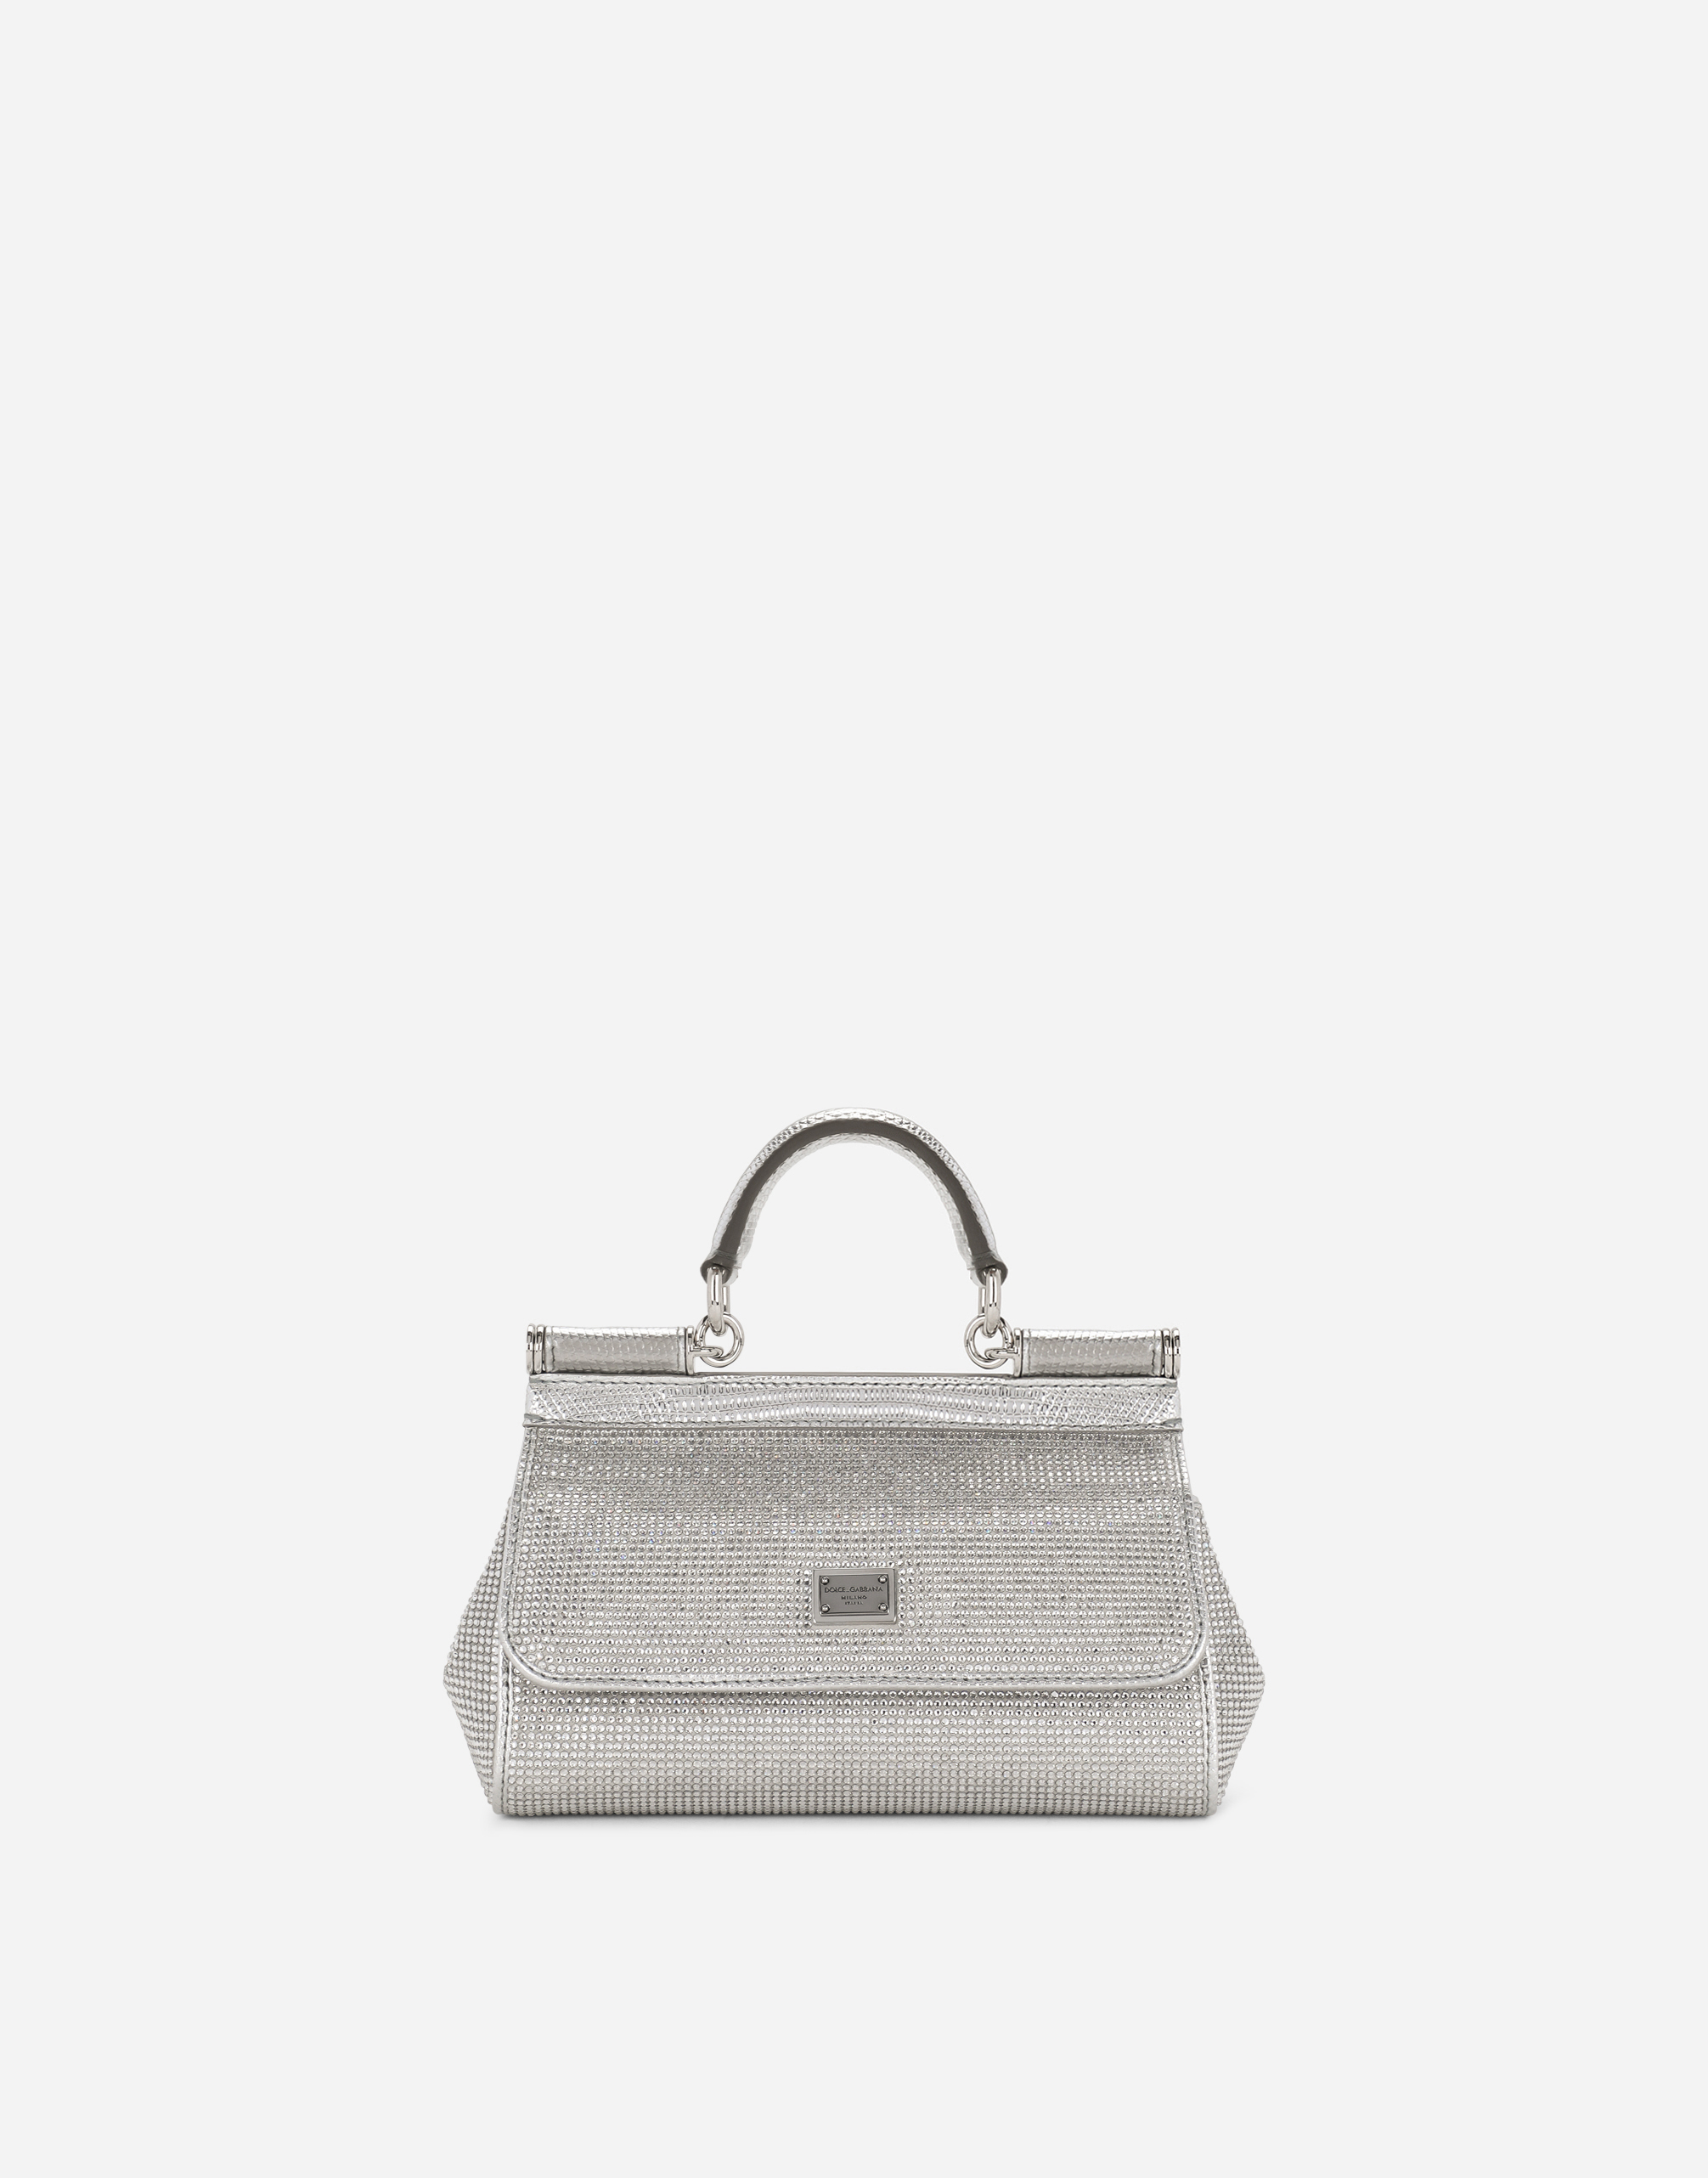 KIM DOLCE&GABBANA Small Sicily handbag in Silver for Women 